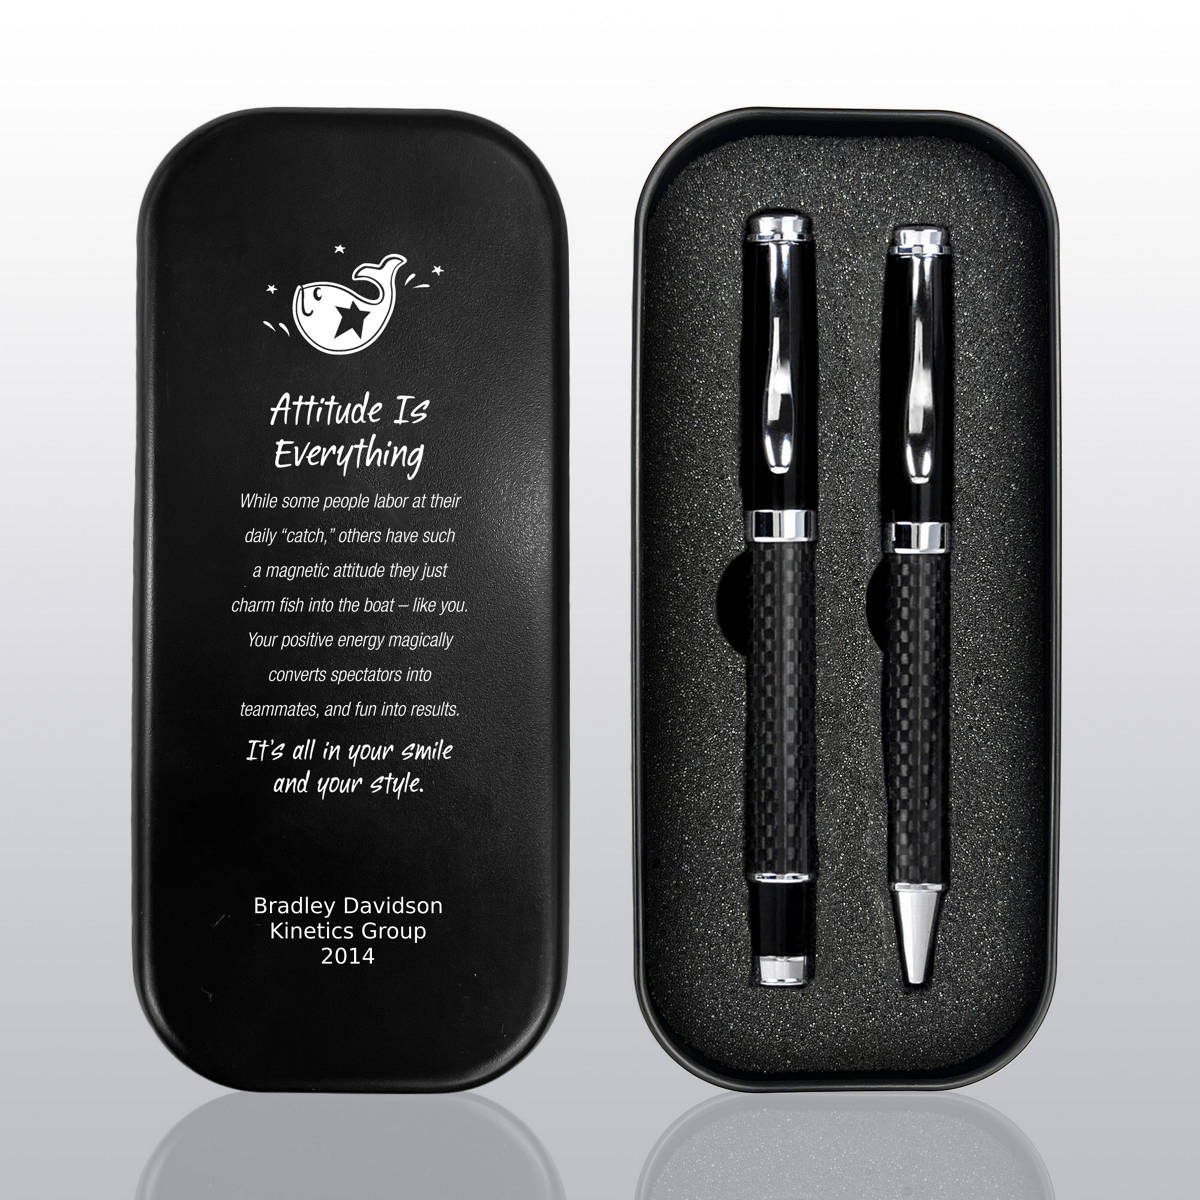 Executive Carbon Fiber Pen Gift Set